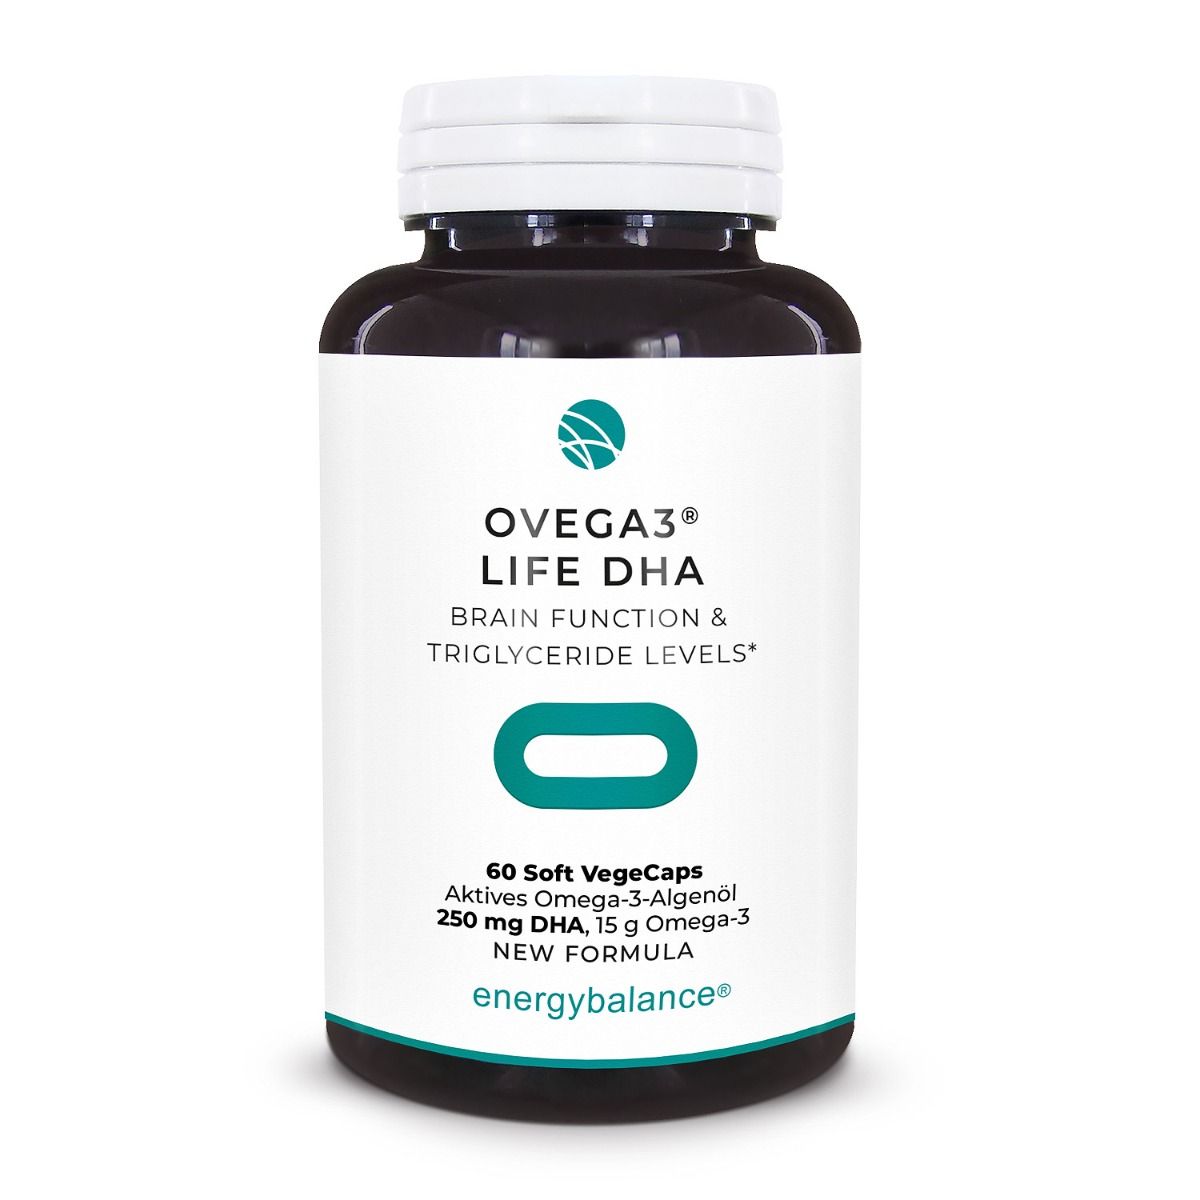 Ovega3 life DHA algae oil, 60 capsules